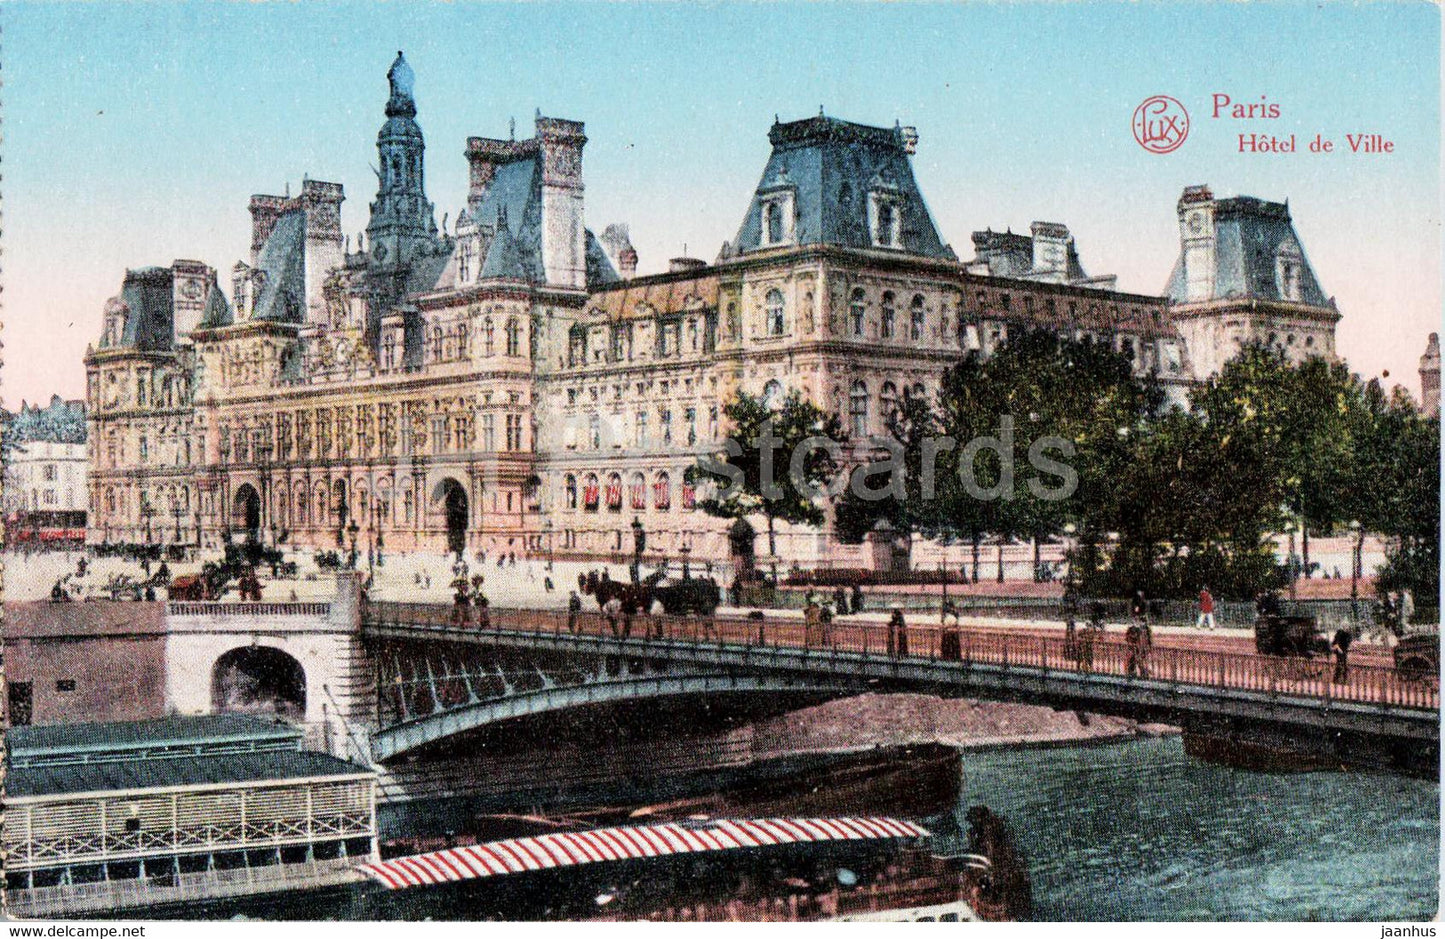 Paris - Hotel de Ville - bridge - Ser 112 - old postcard - France - unused - JH Postcards